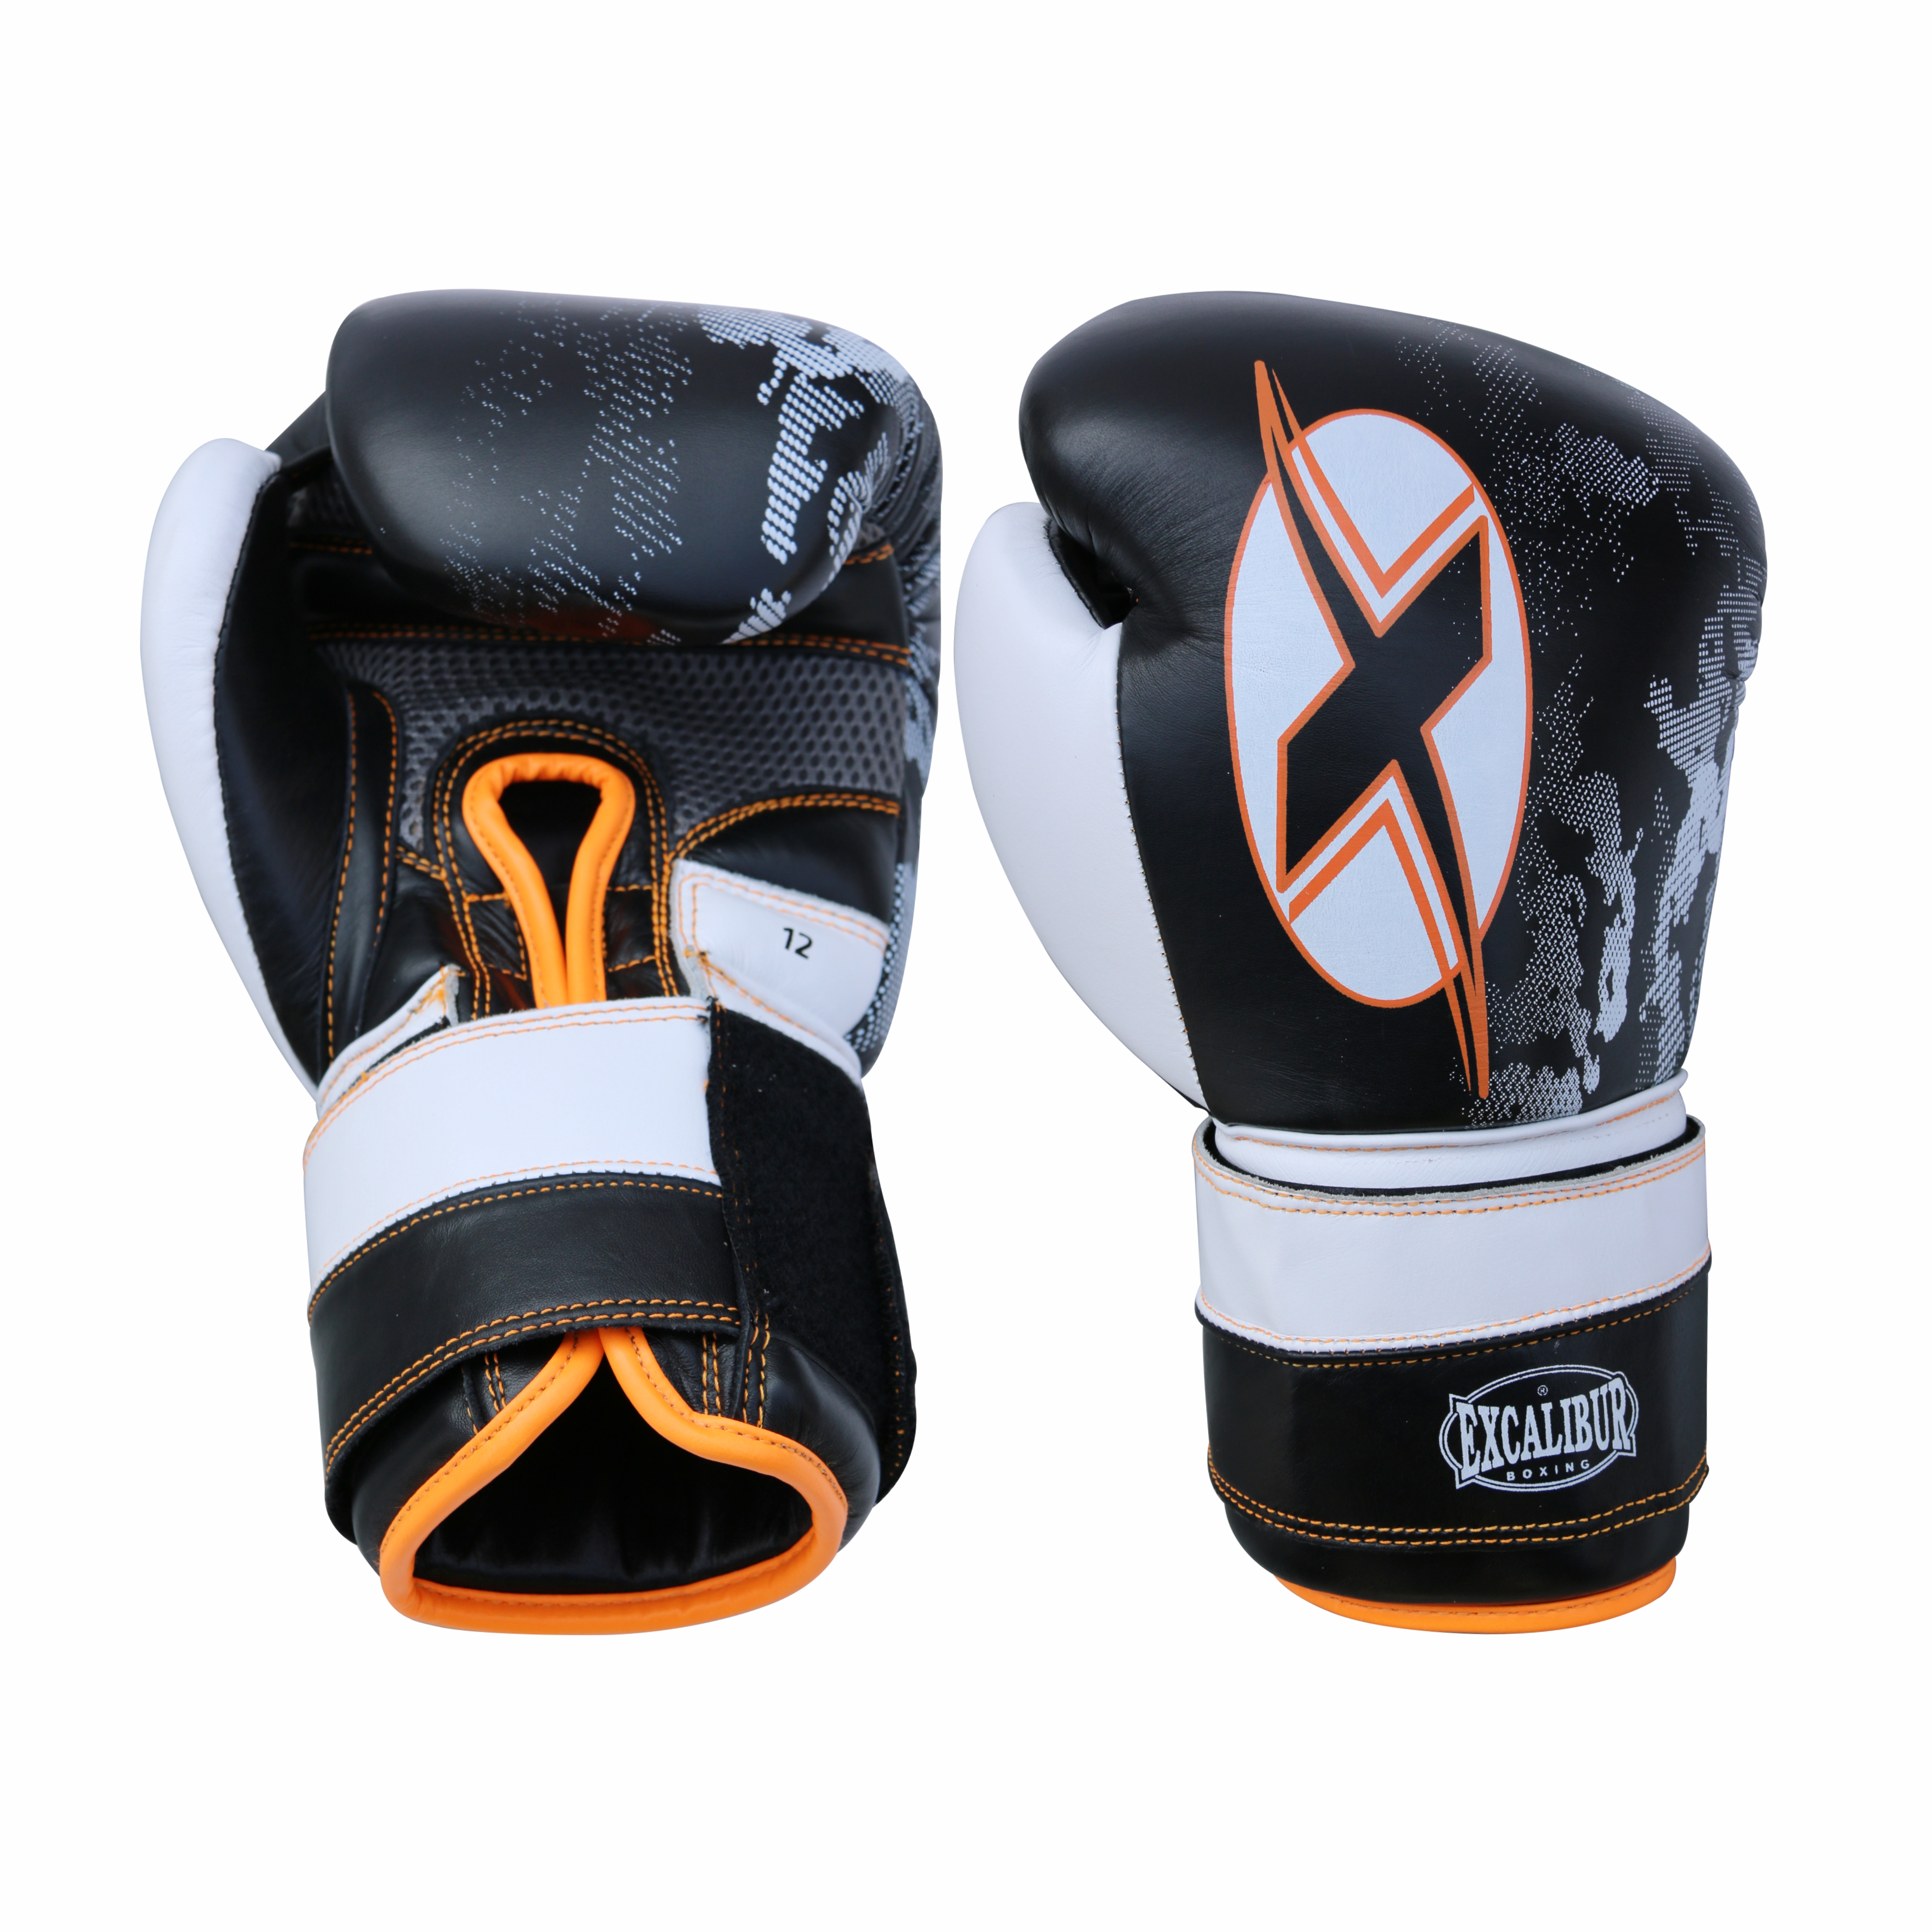 Tsunami Boxing Gloves